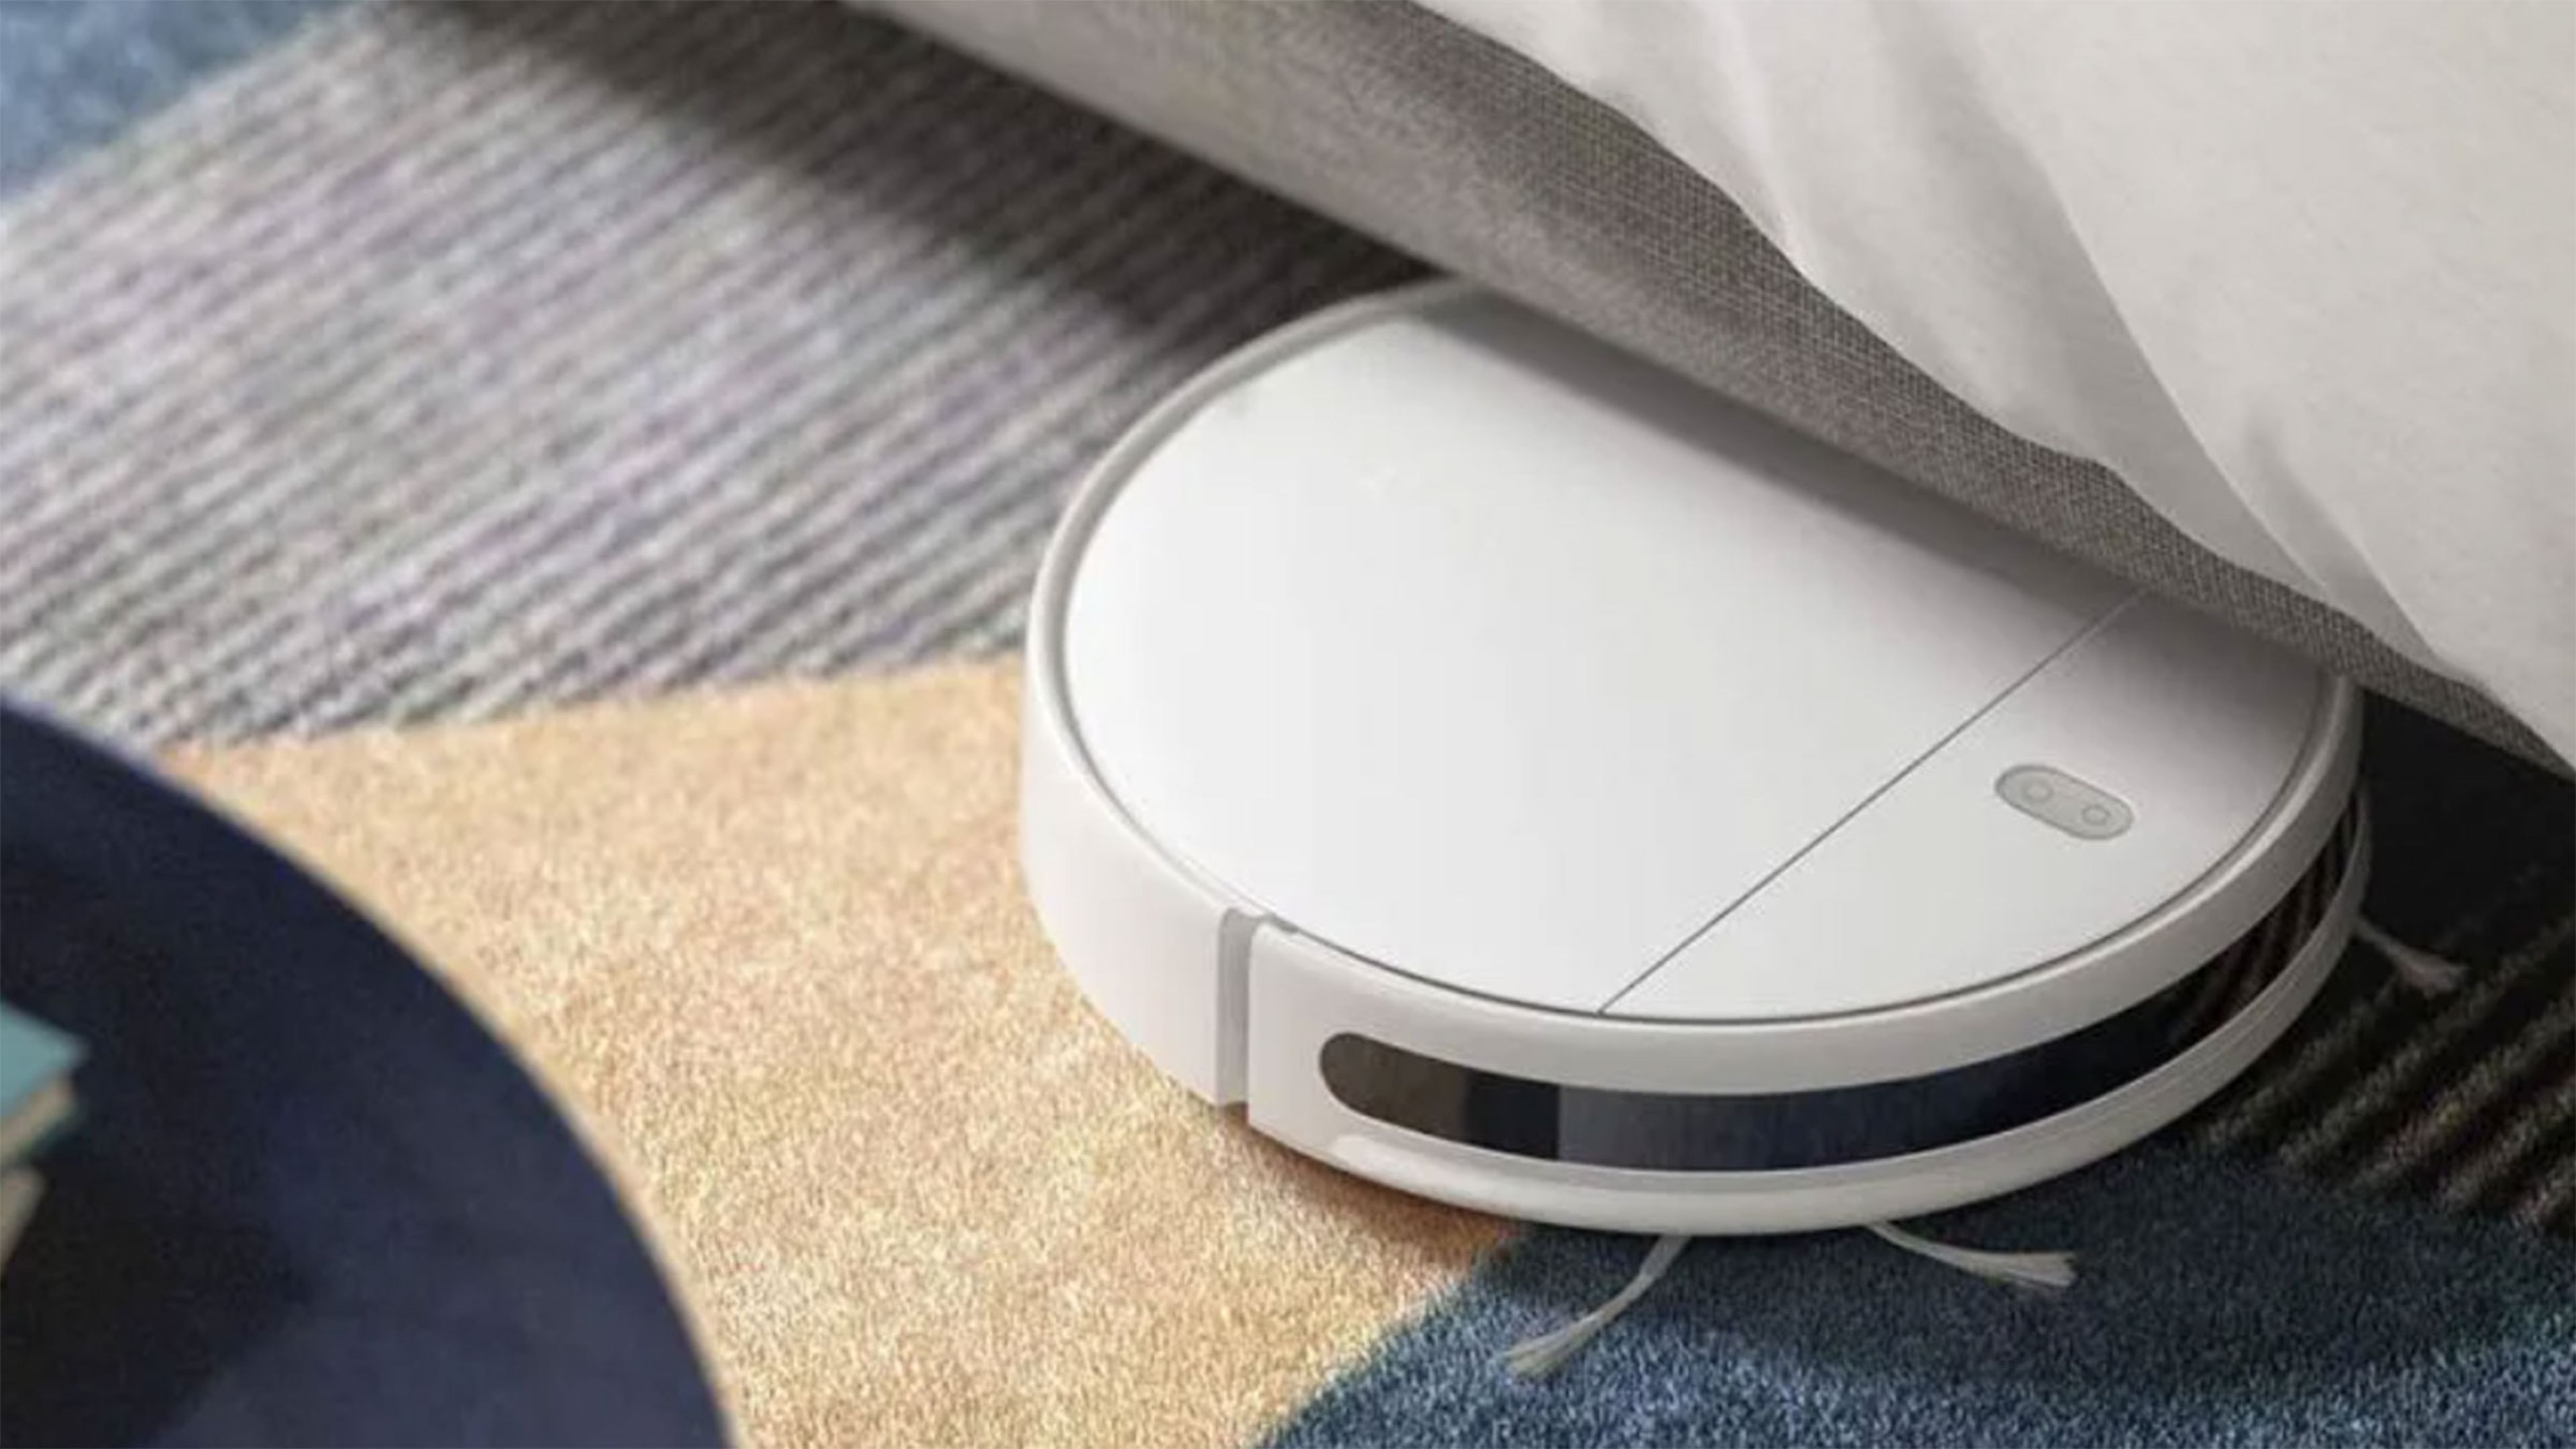 Xiaomi Mijia G1 Robot Vacuum